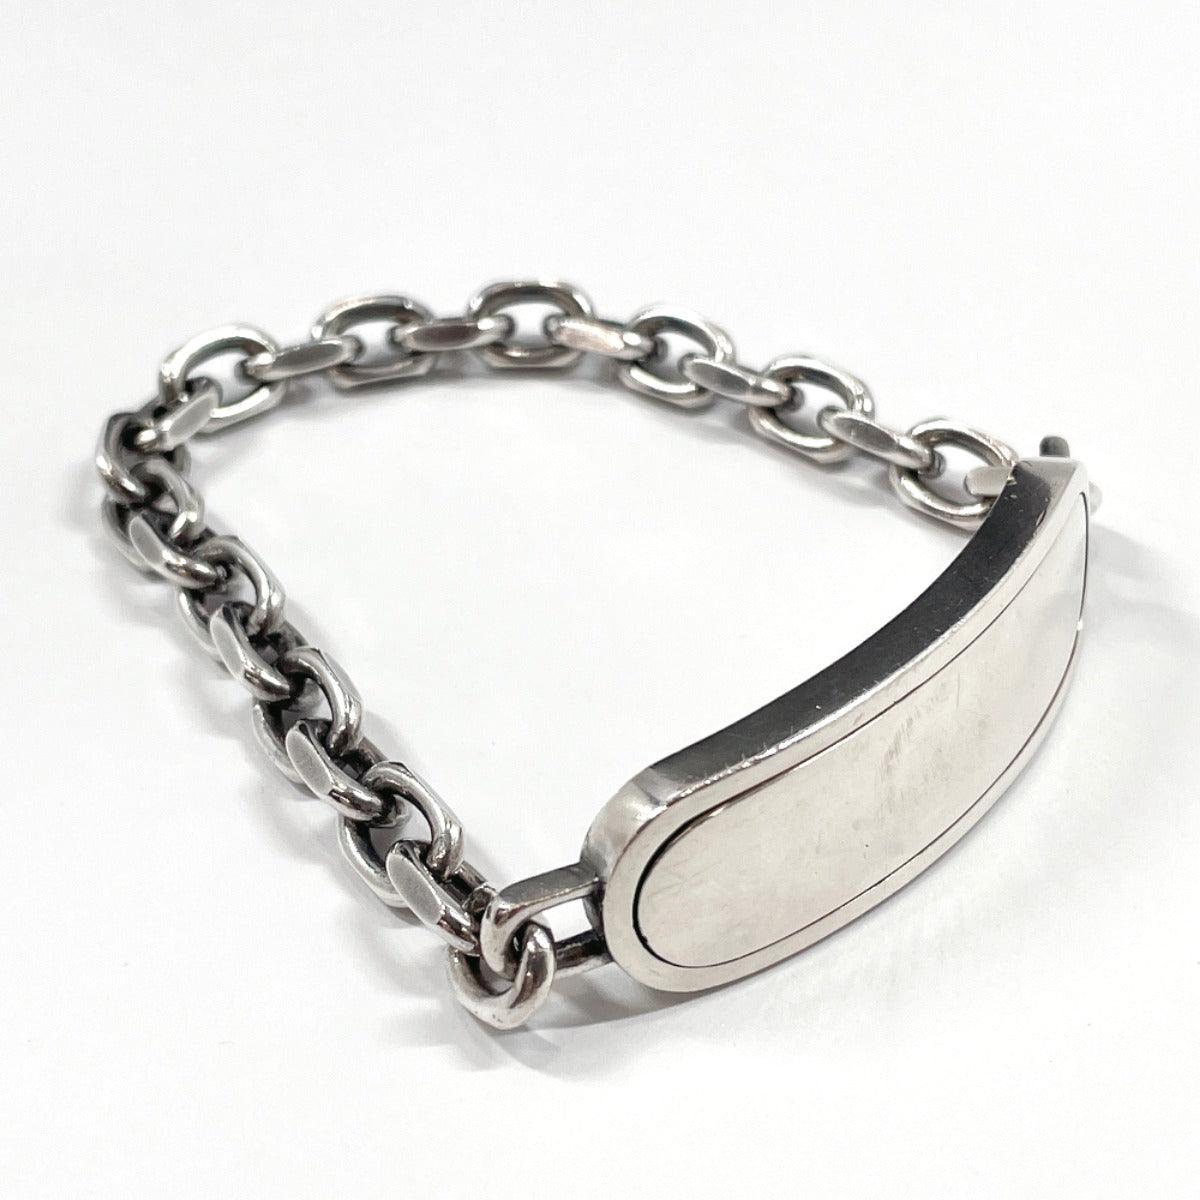 Bottega Veneta Sterling Silver Chain Bracelet - Men - Silver Jewelry